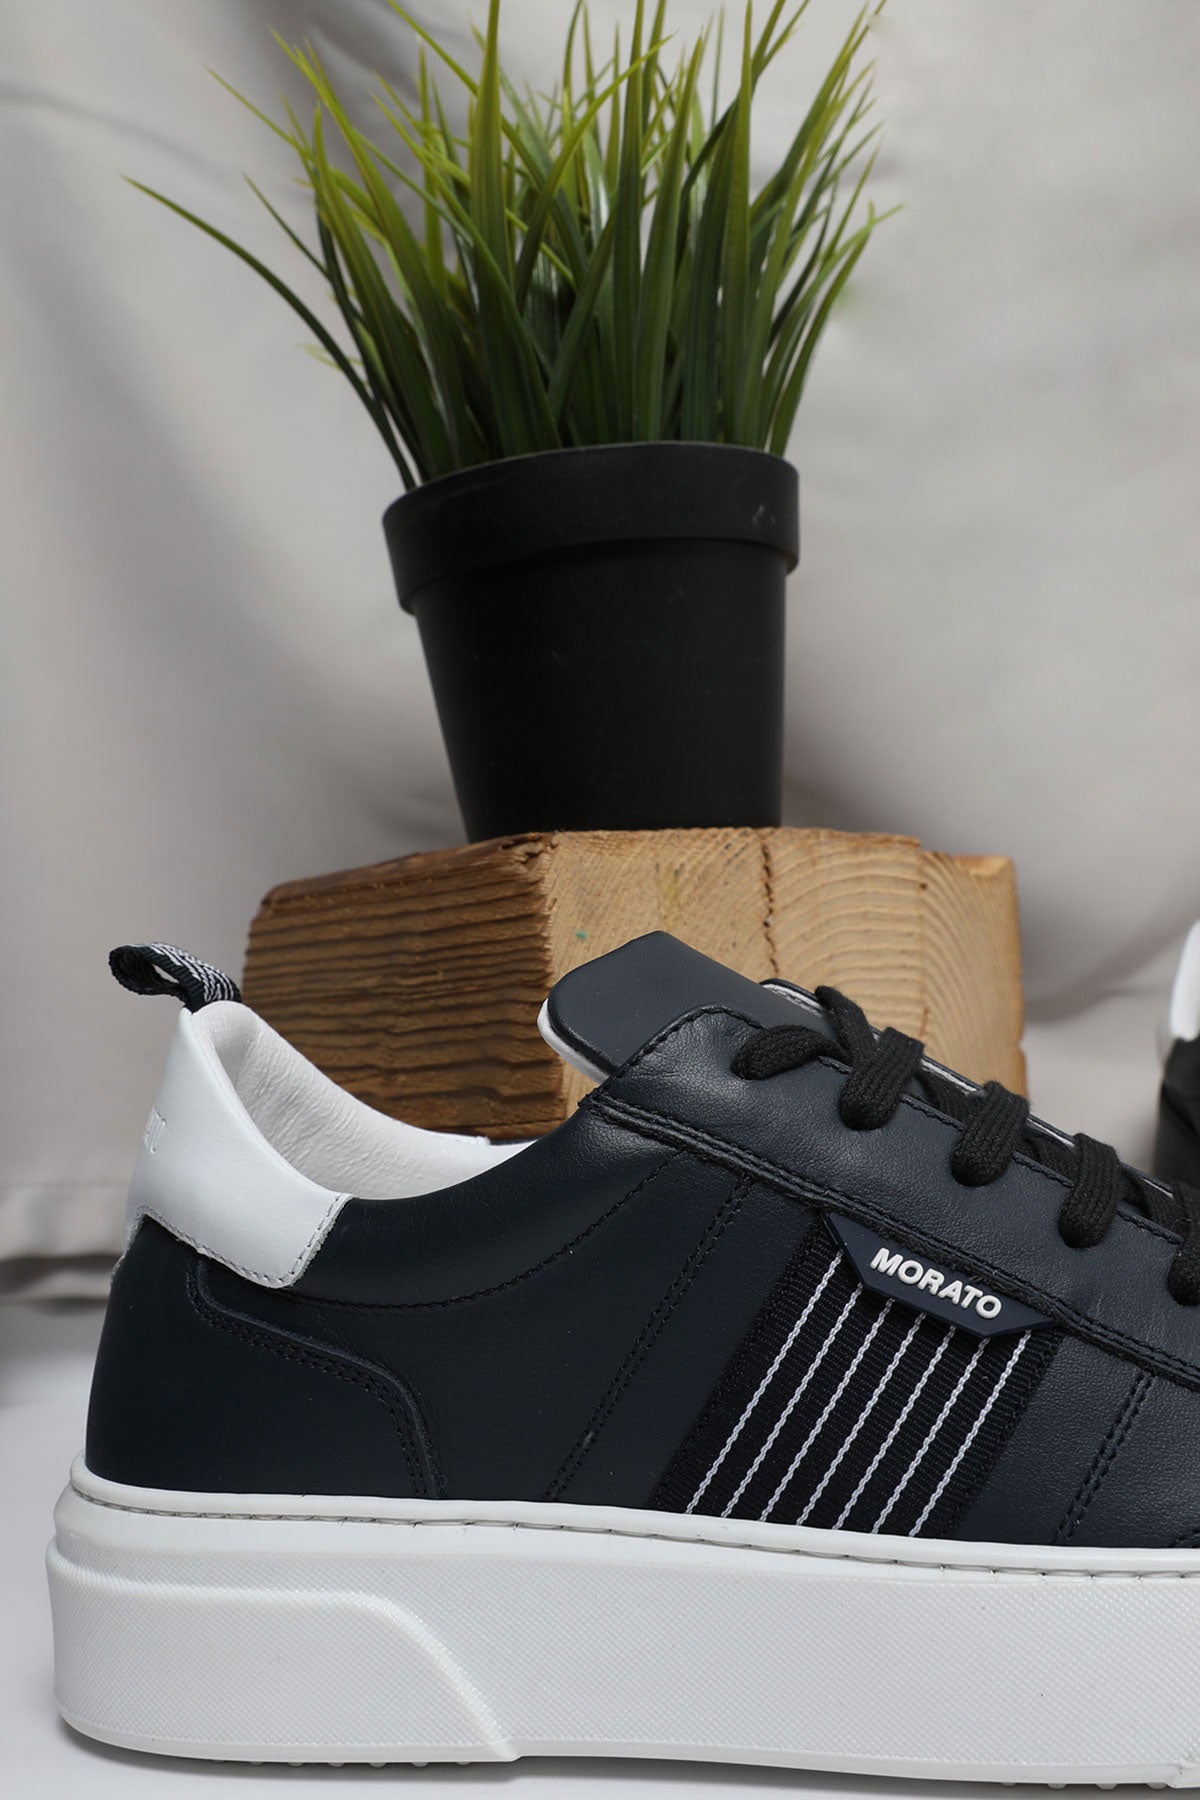 Antony Morato Sneaker Ayakkabı-Libas Trendy Fashion Store